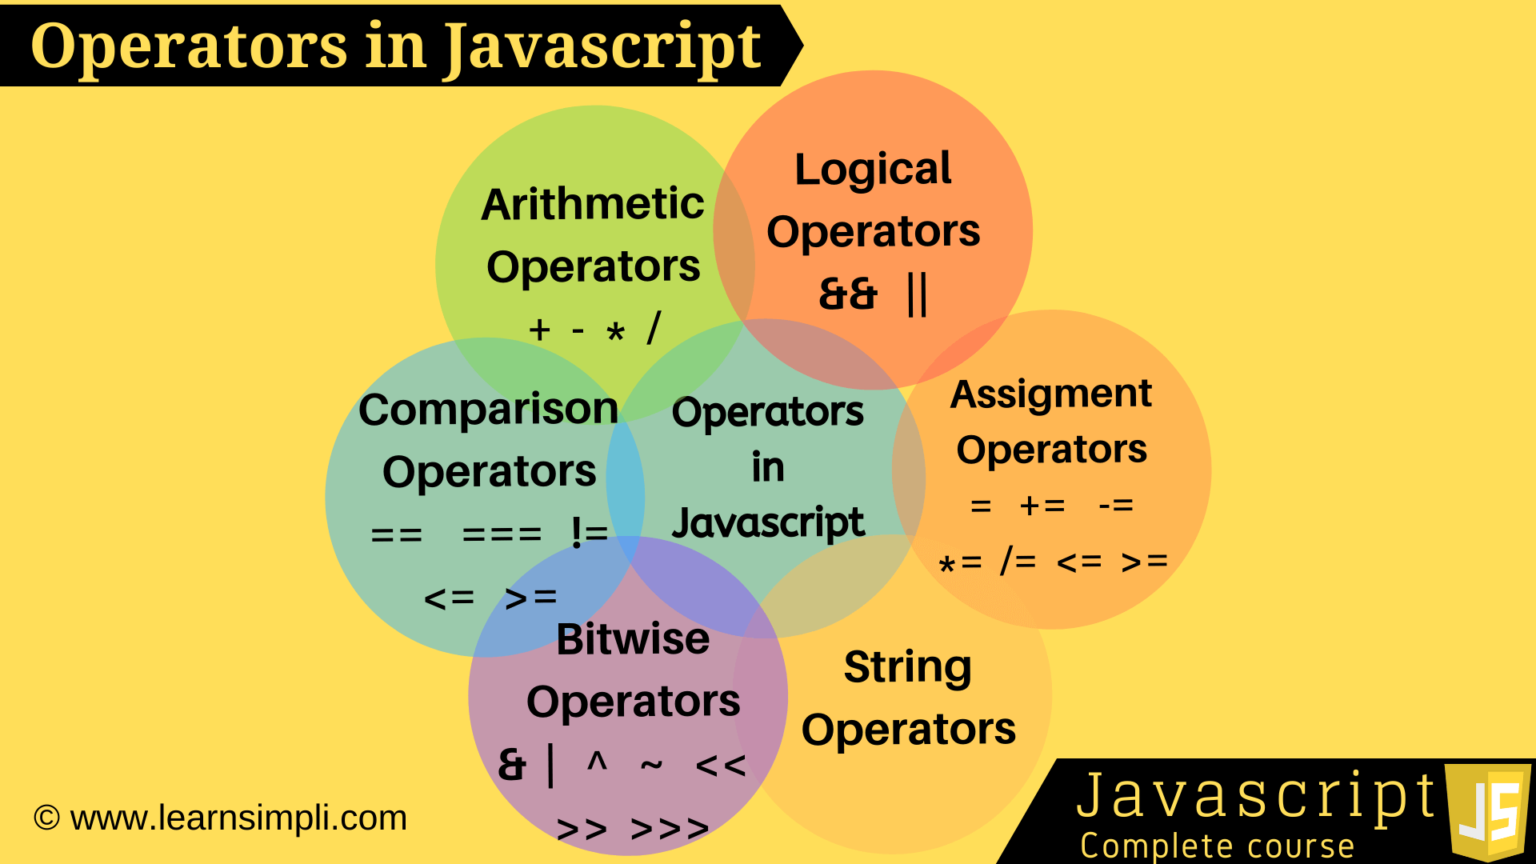 javascript assignment operators example